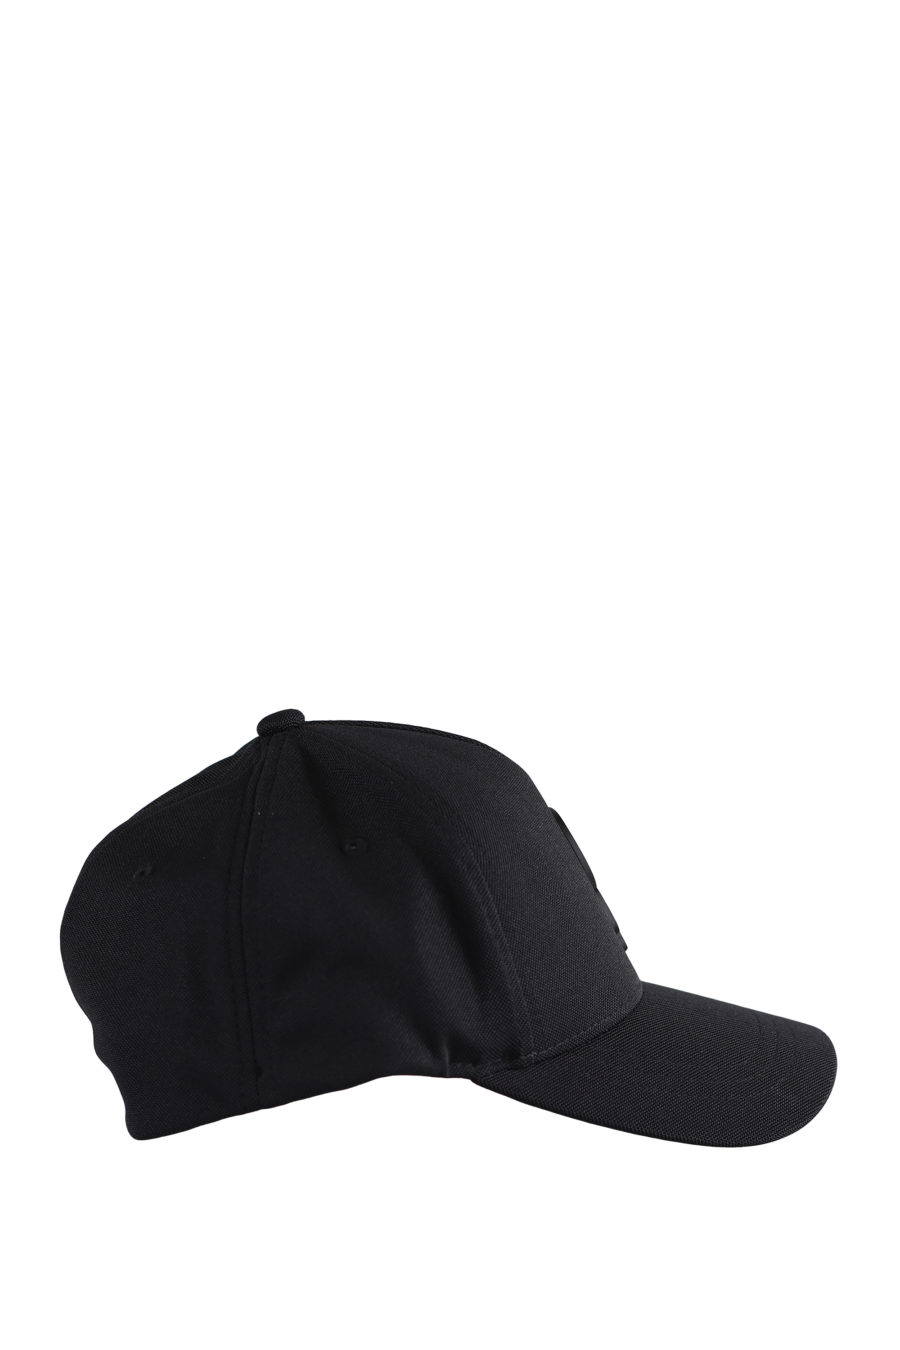 Gorra negra con "Karl" engomado en blanco - IMG 9603